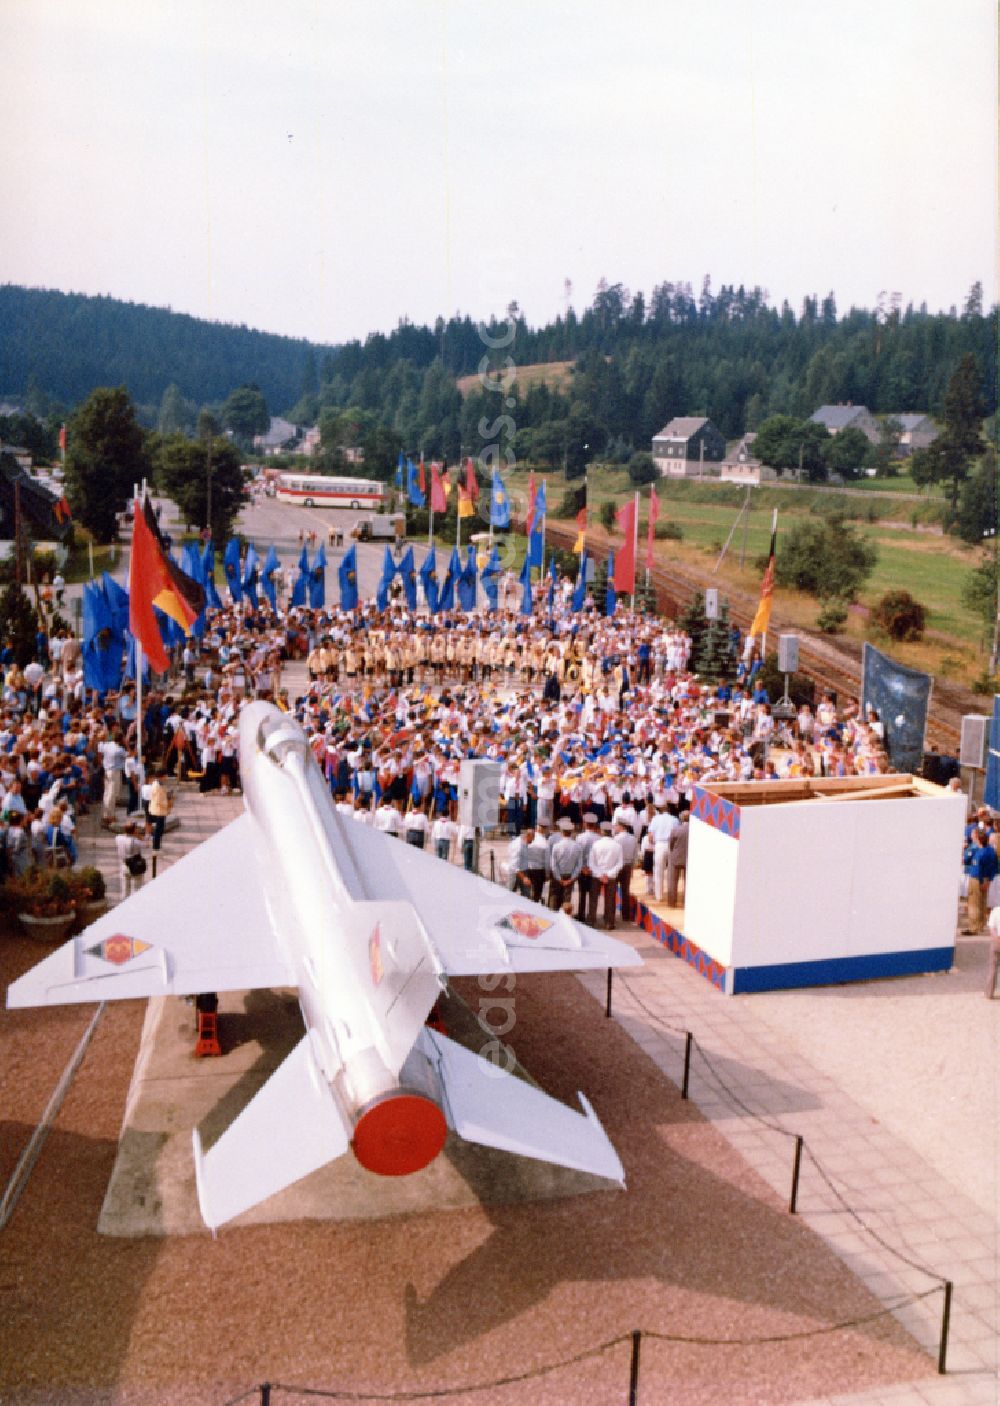 Morgenröthe-Rautenkranz: Pioneer - event at the memorial space in a MiG-21 F-13 of the first German cosmonaut Sigmund Jaehn in Morgenroethe- Rautenkranz in Saxony